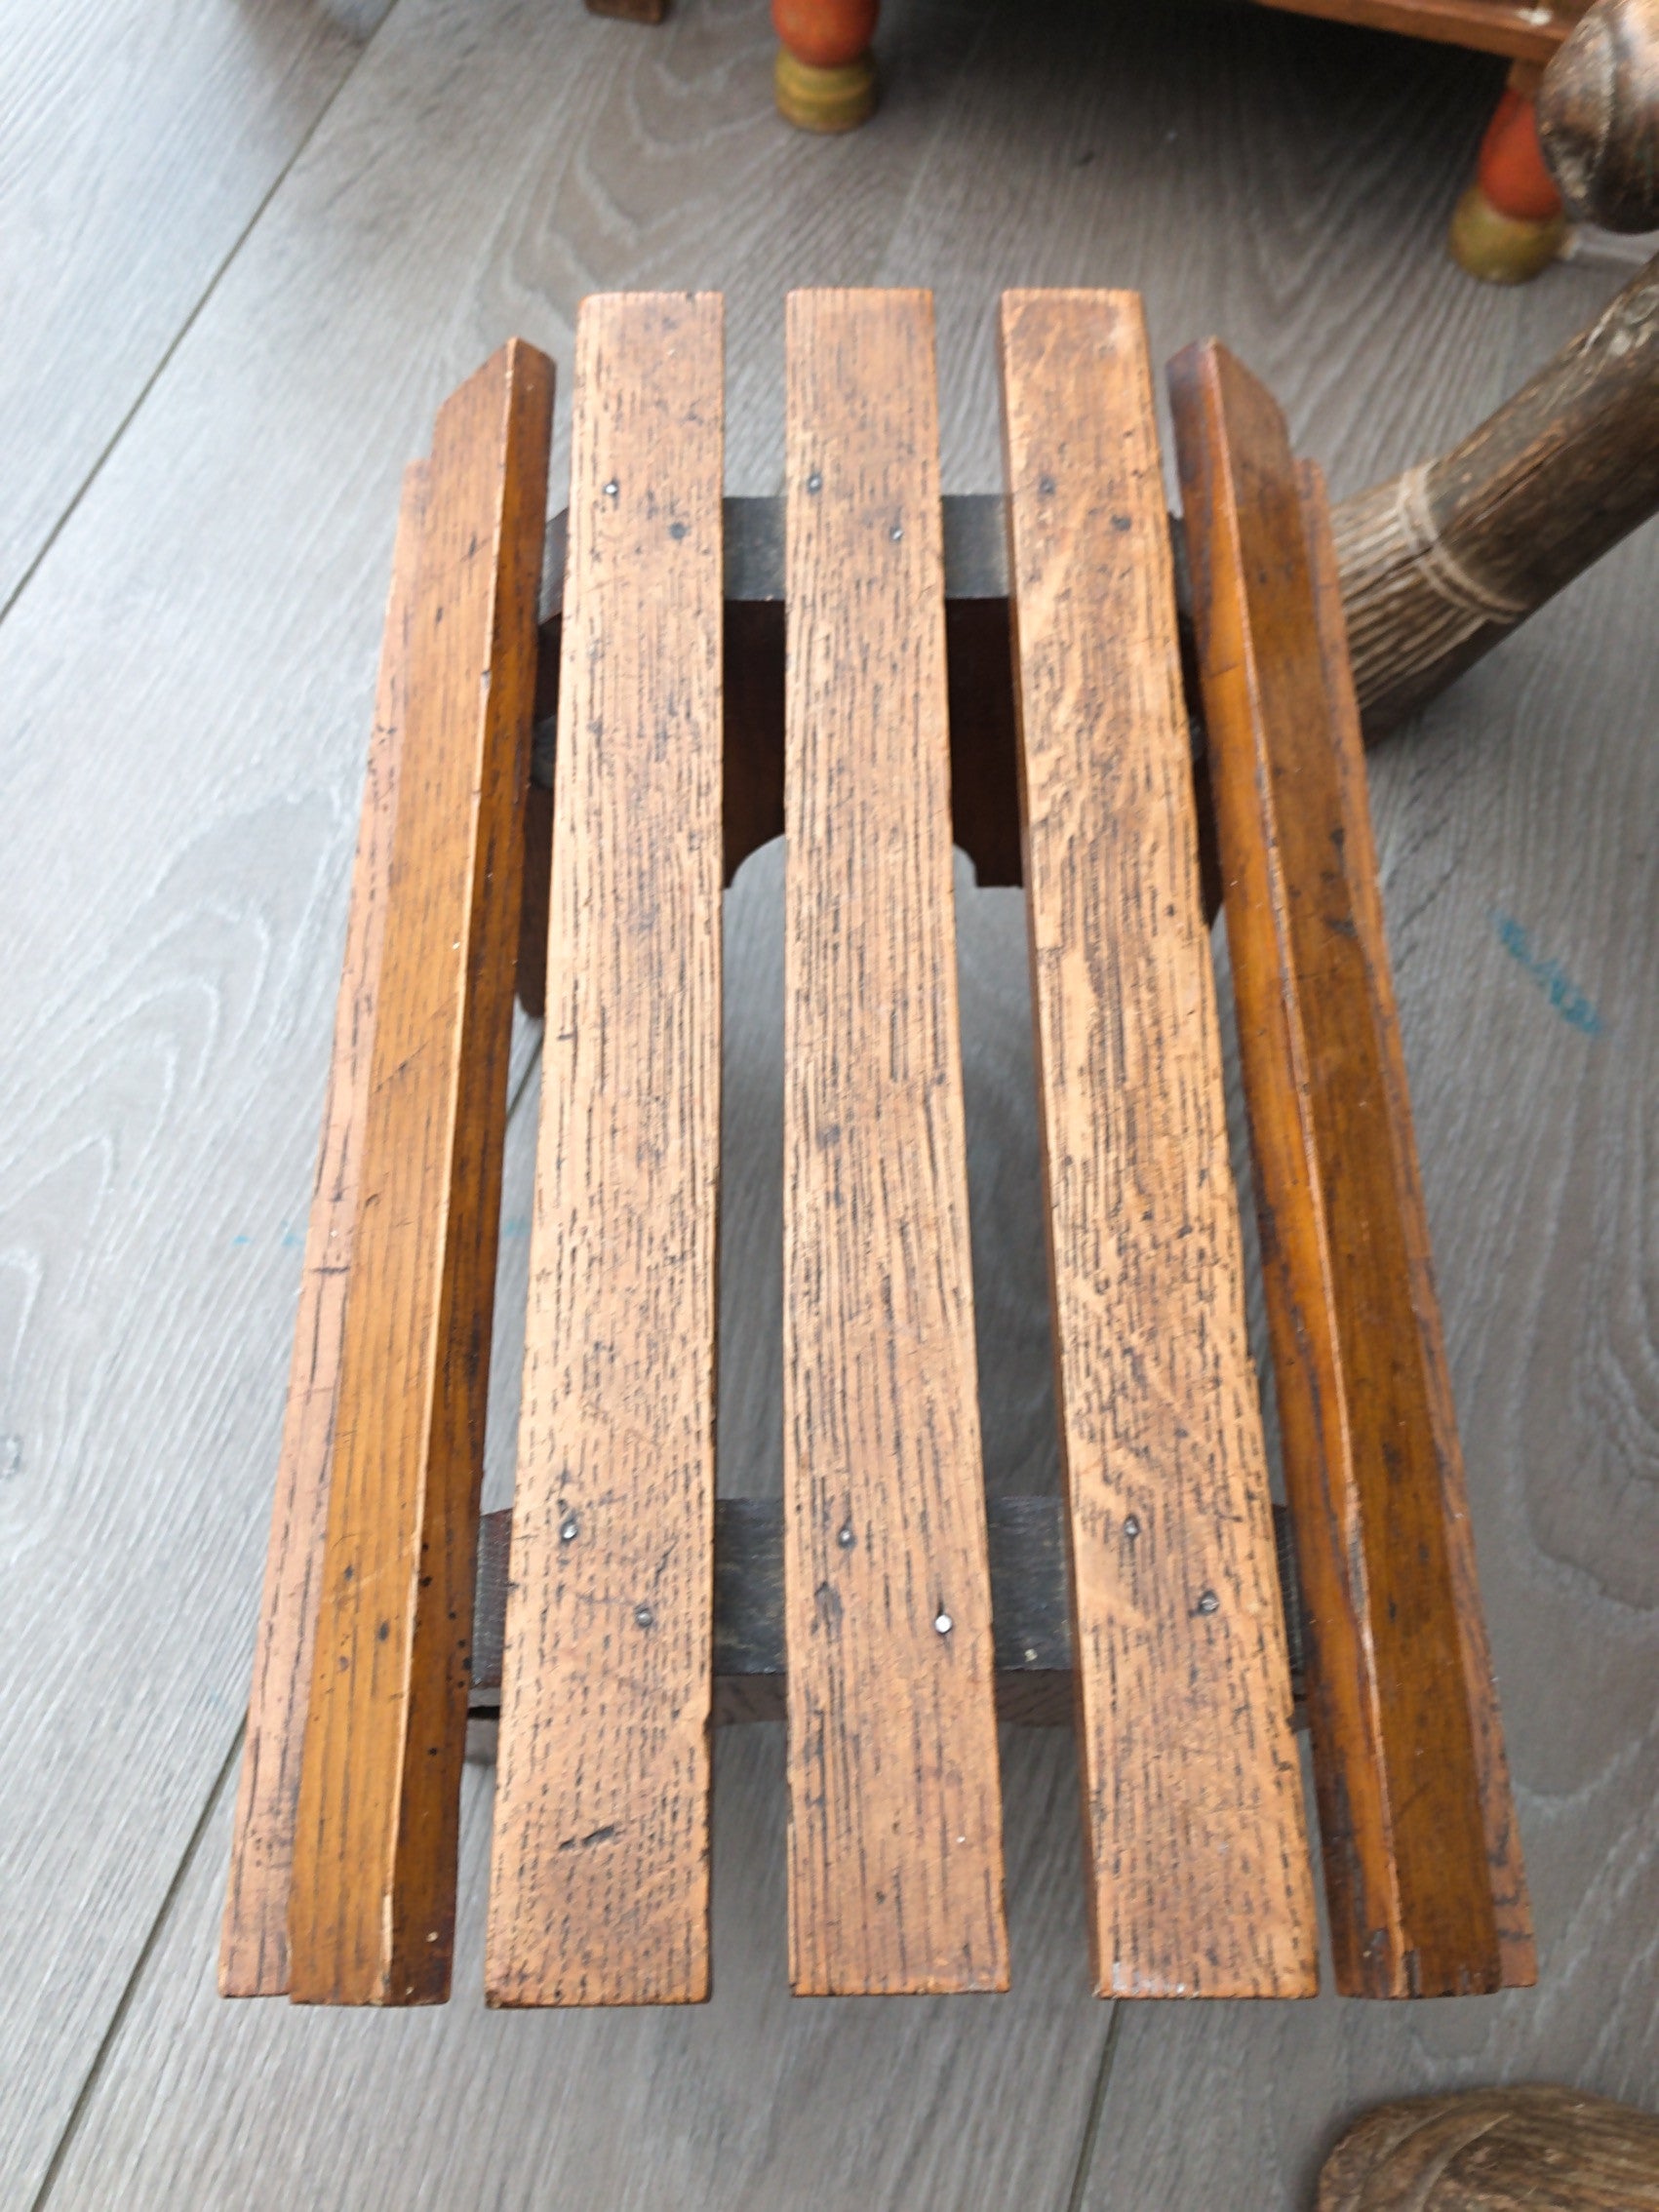 Vintage Wooden Footstool